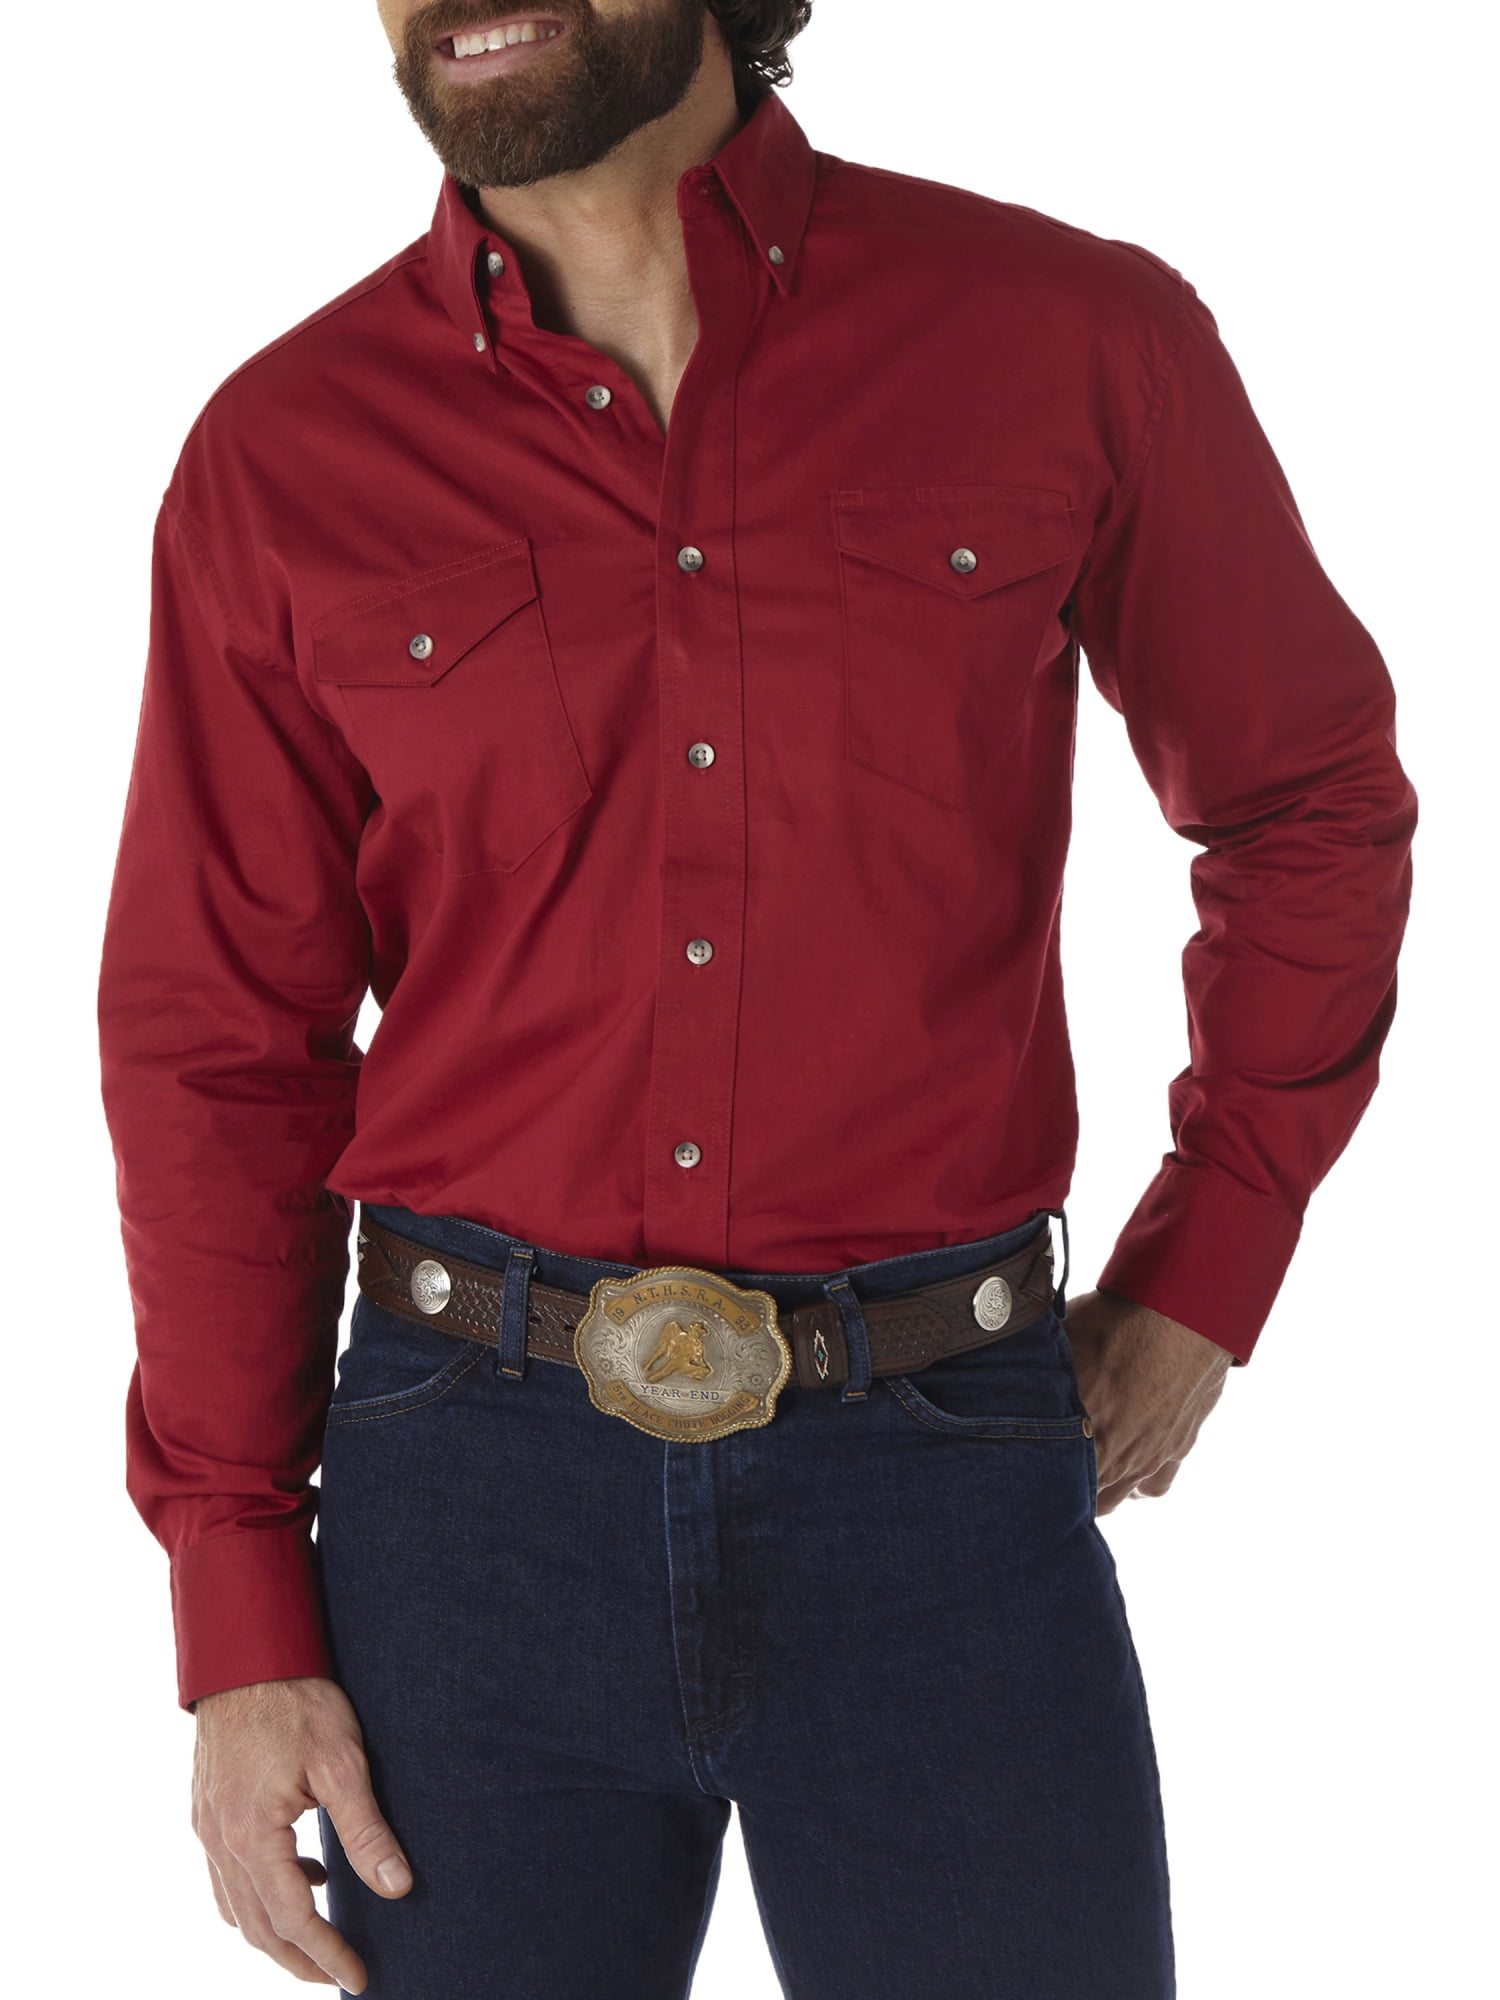 Long John western sous-vêtements cow-boy sous-vêtements s-4xl